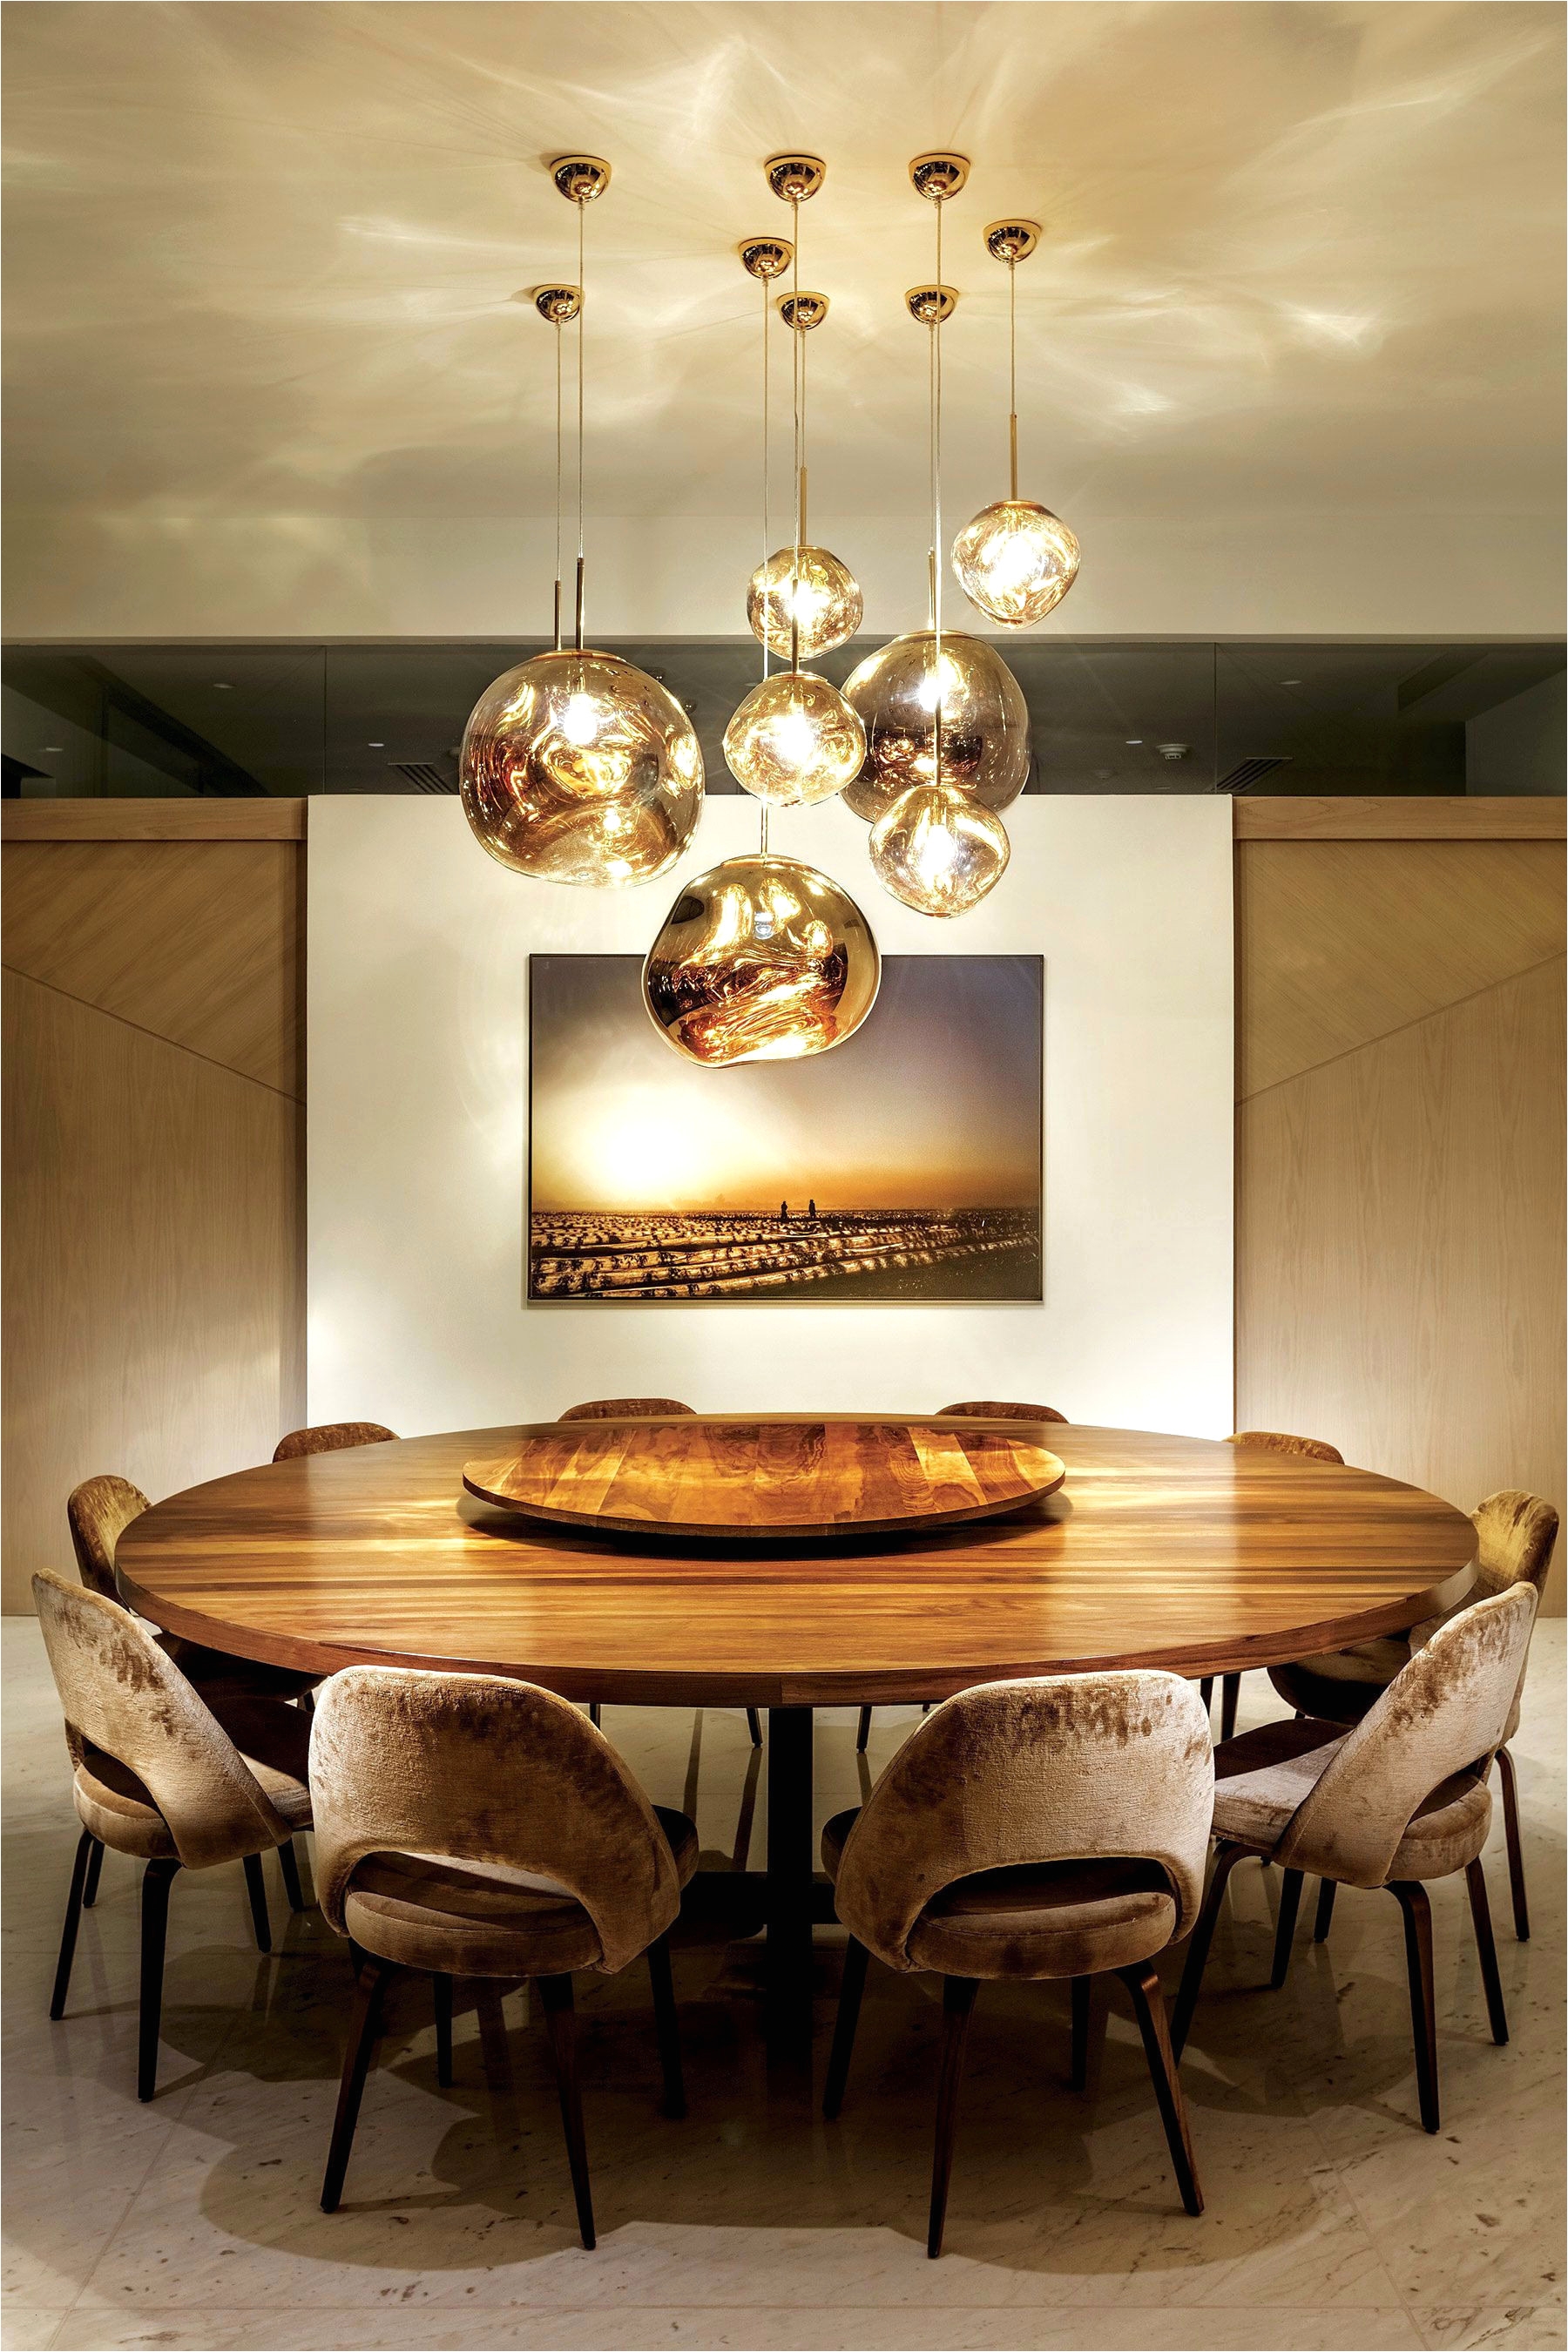 led vanity light bar luxury collect idea strategic kitchen lighting lighting 0d a chandeliers